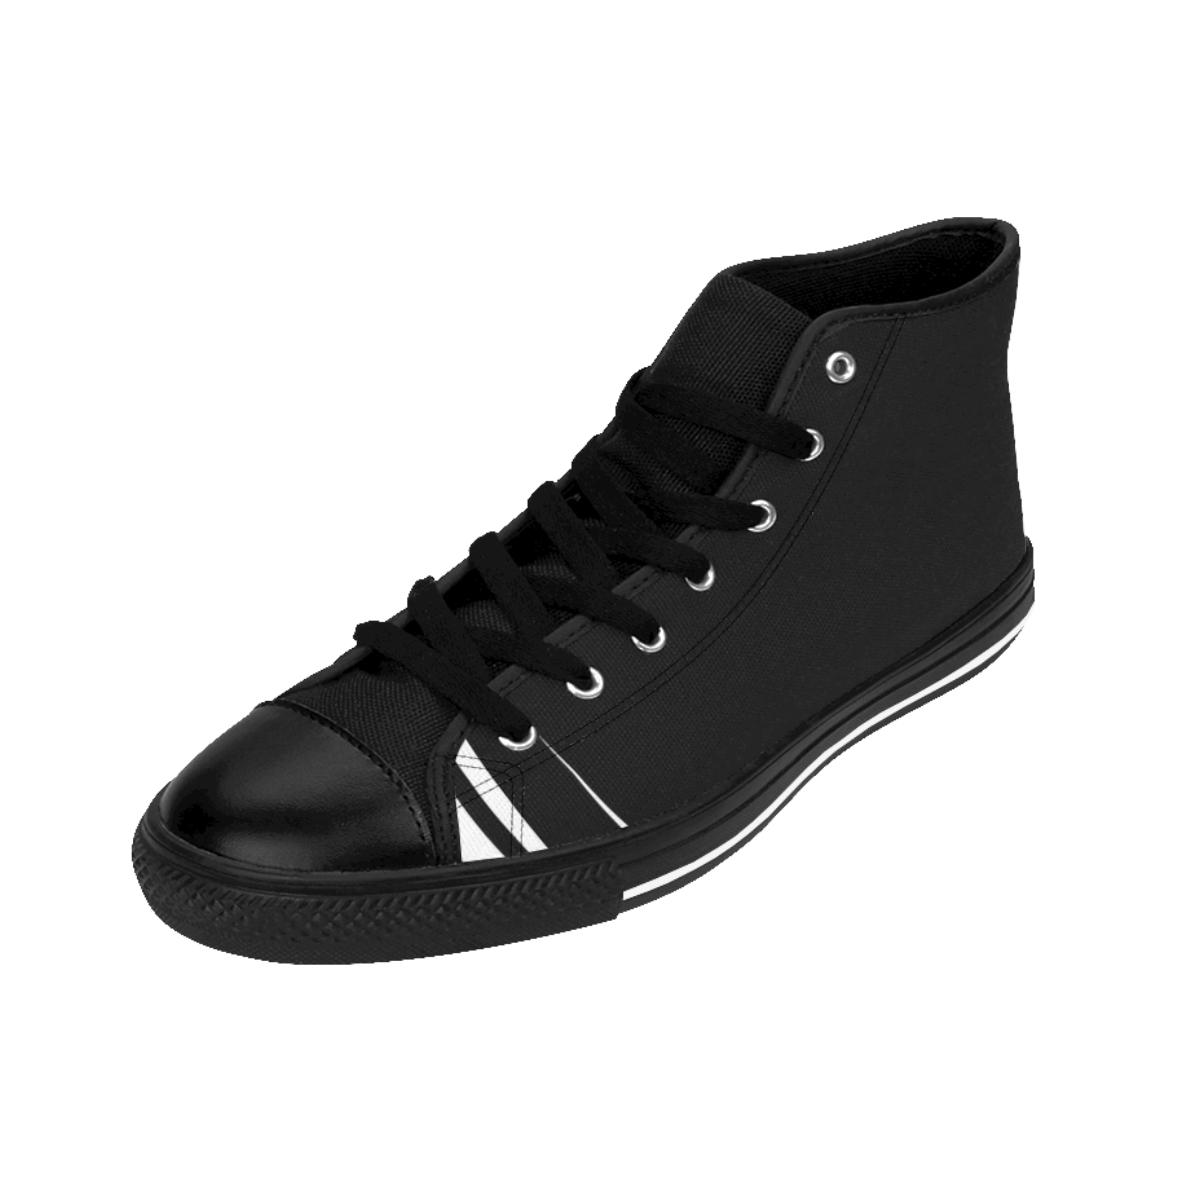 Black School Shoes product thumbnail image